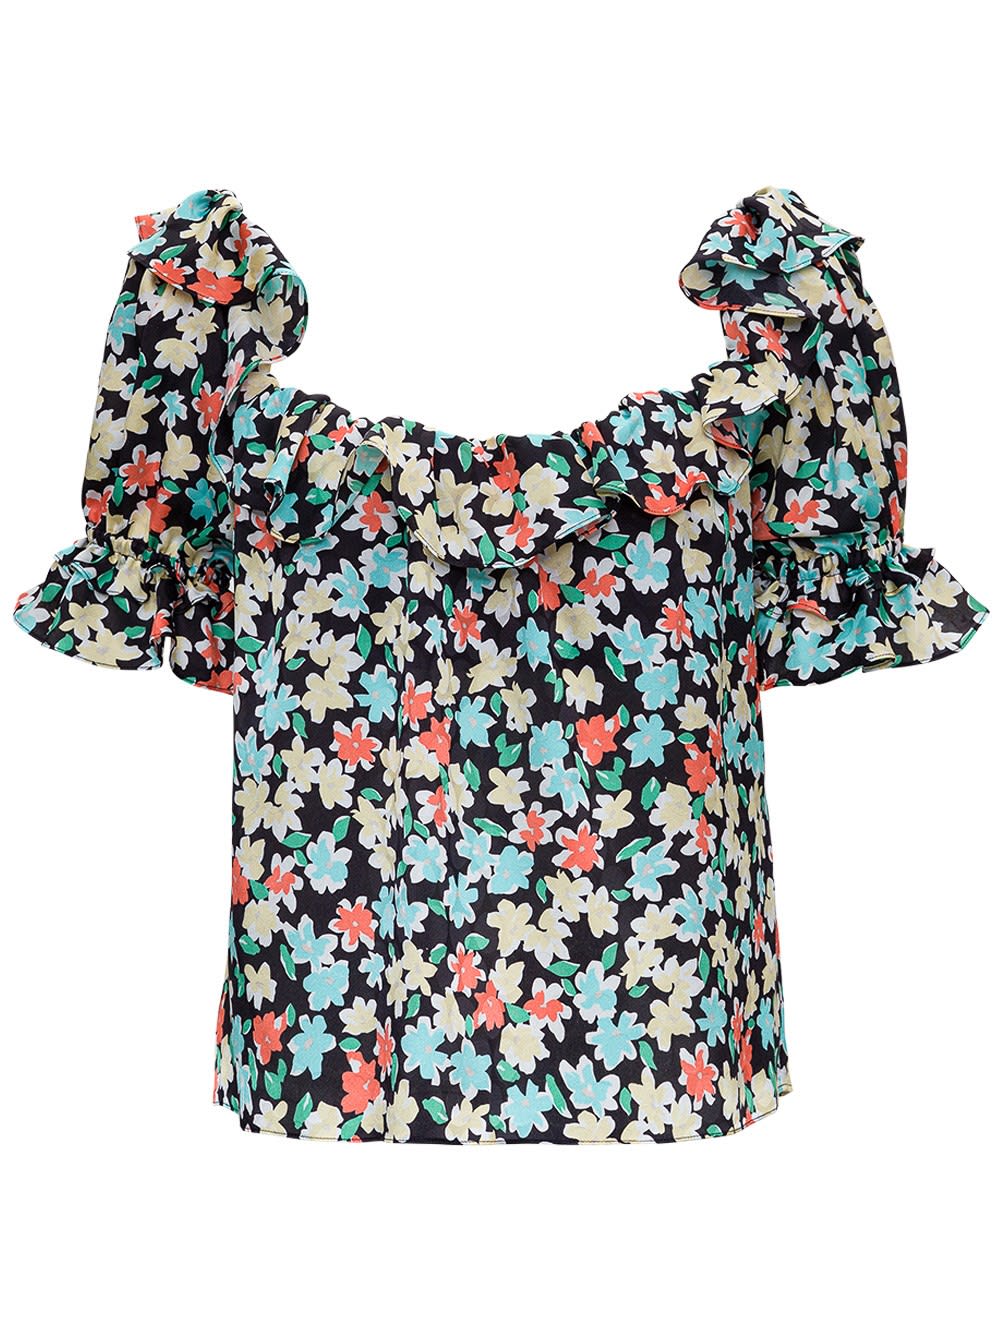 Saint Laurent Floral Silk Shirt With Ruffles Detail